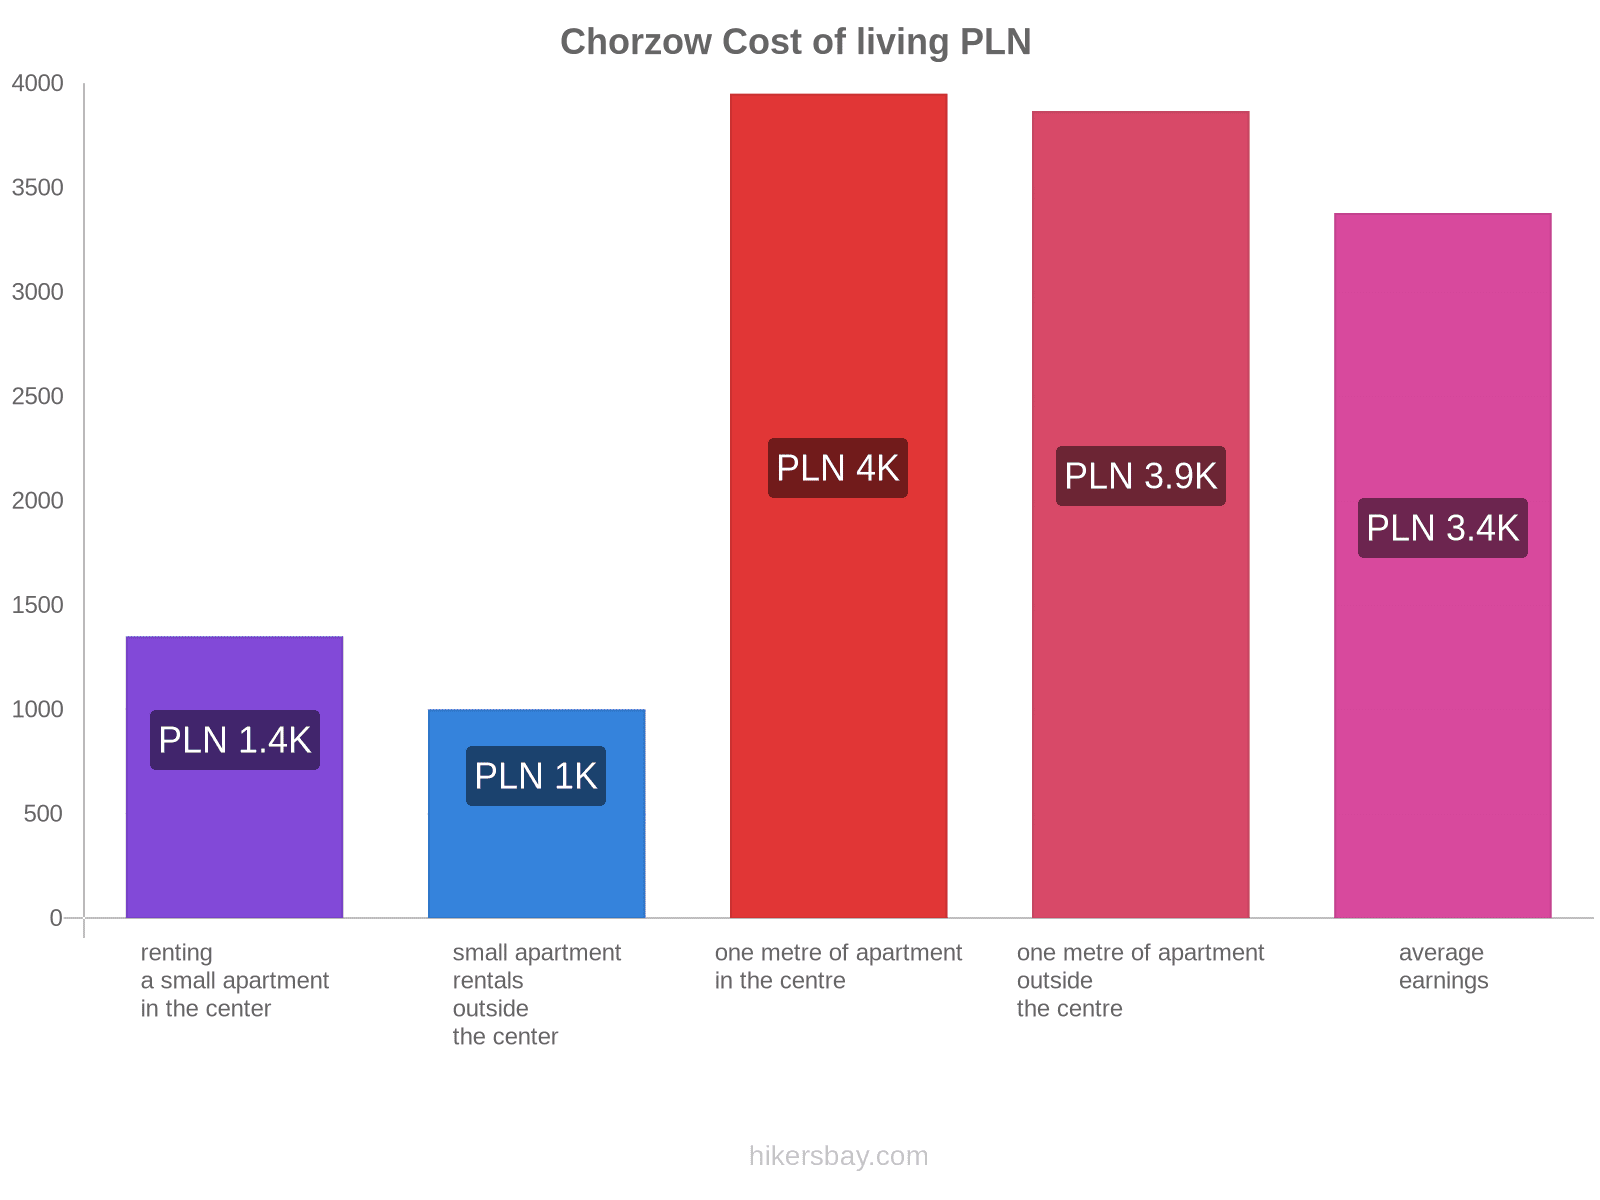 Chorzow cost of living hikersbay.com